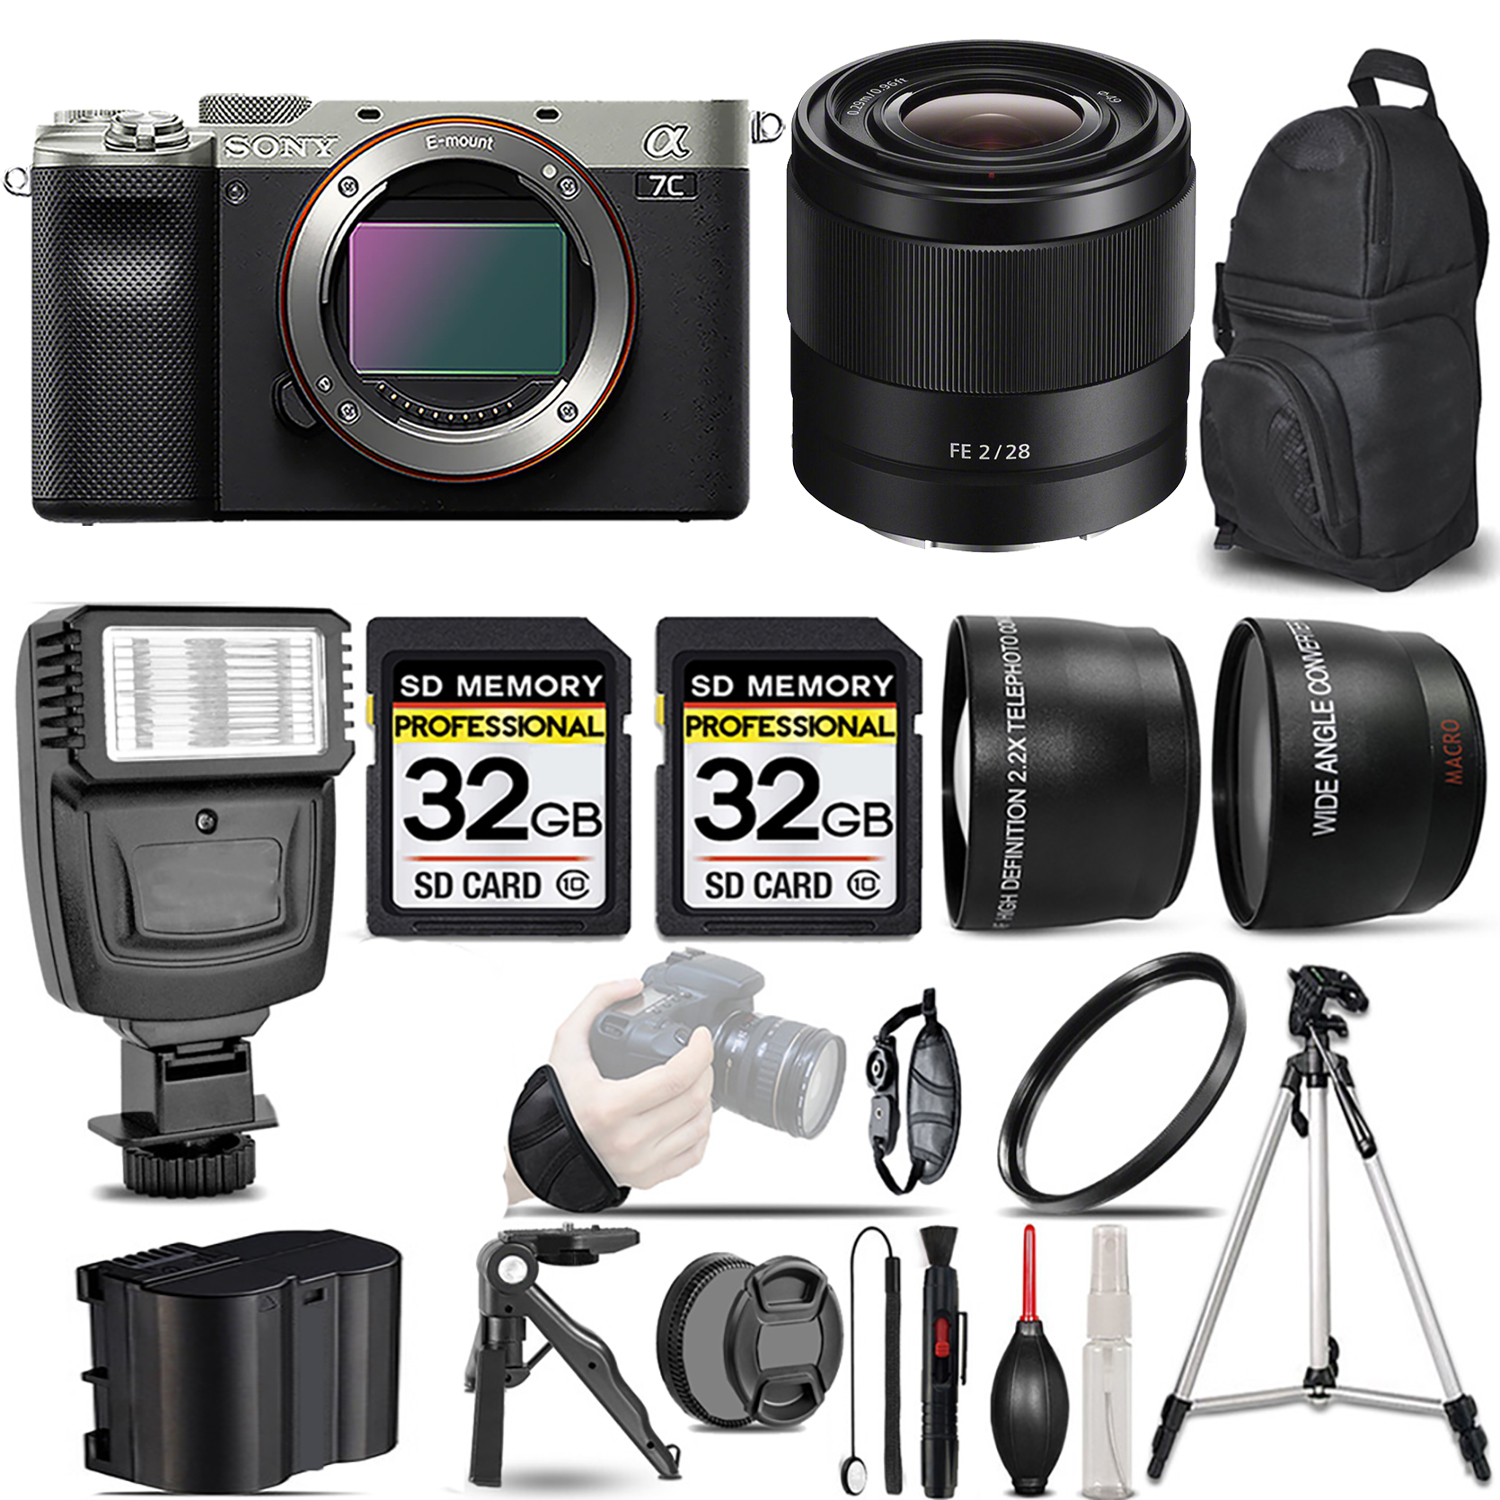 a7C Camera (Silver)  +28mm f/2 Lens +Flash +64GB+ UV Filter+ Tripod *FREE SHIPPING*